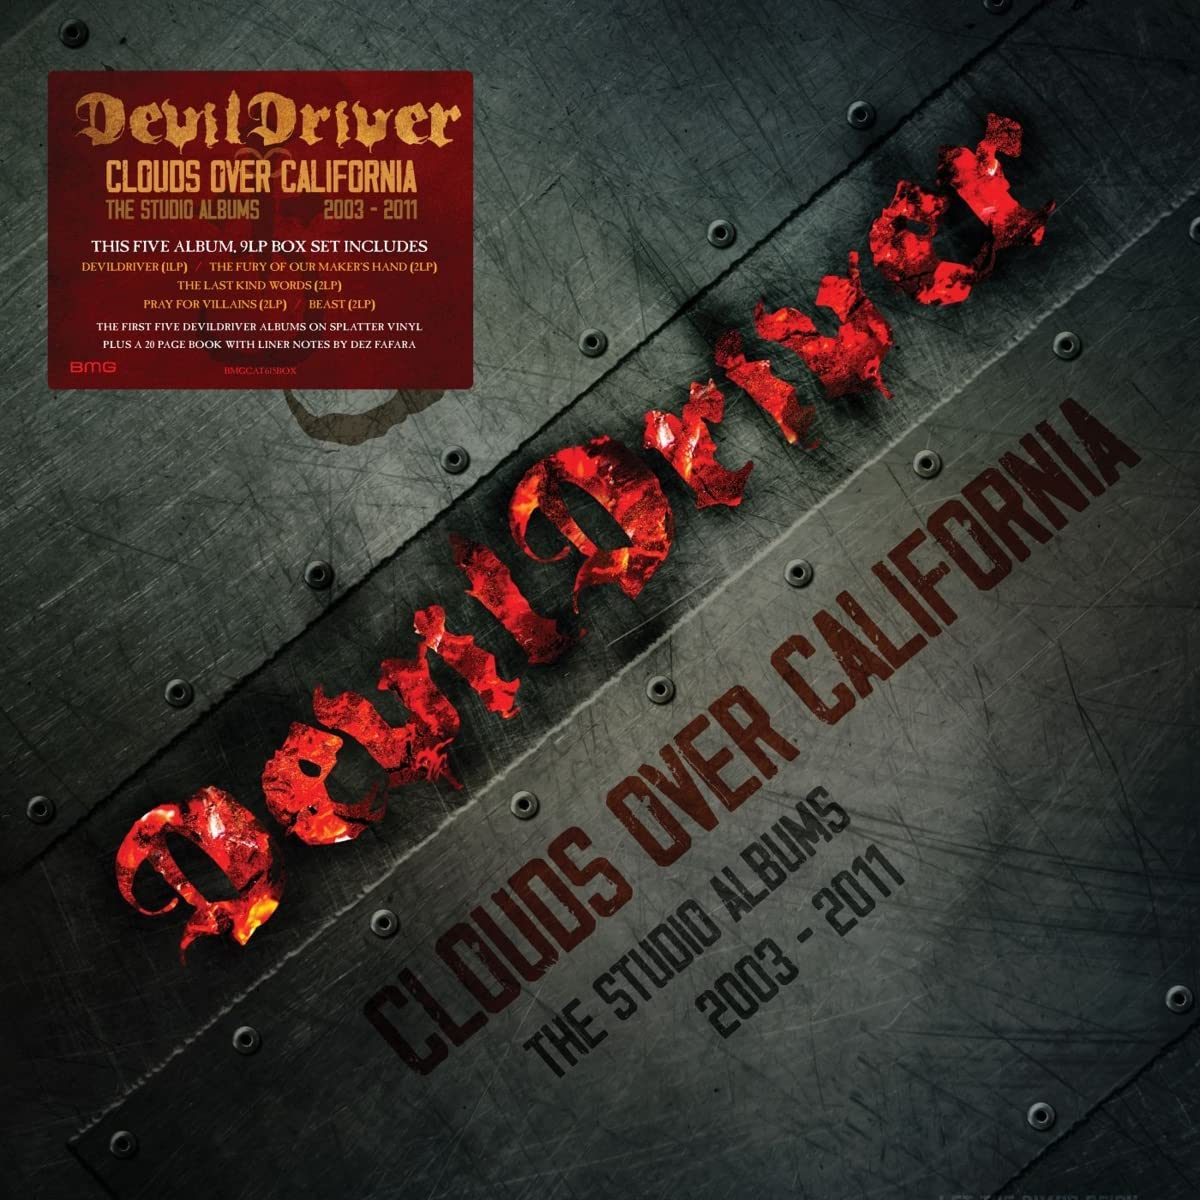 DevilDriver "Clouds Over California: The Studio Albums 2003-2011" Deluxe 9LP Splatter Vinyl & Book Box Set